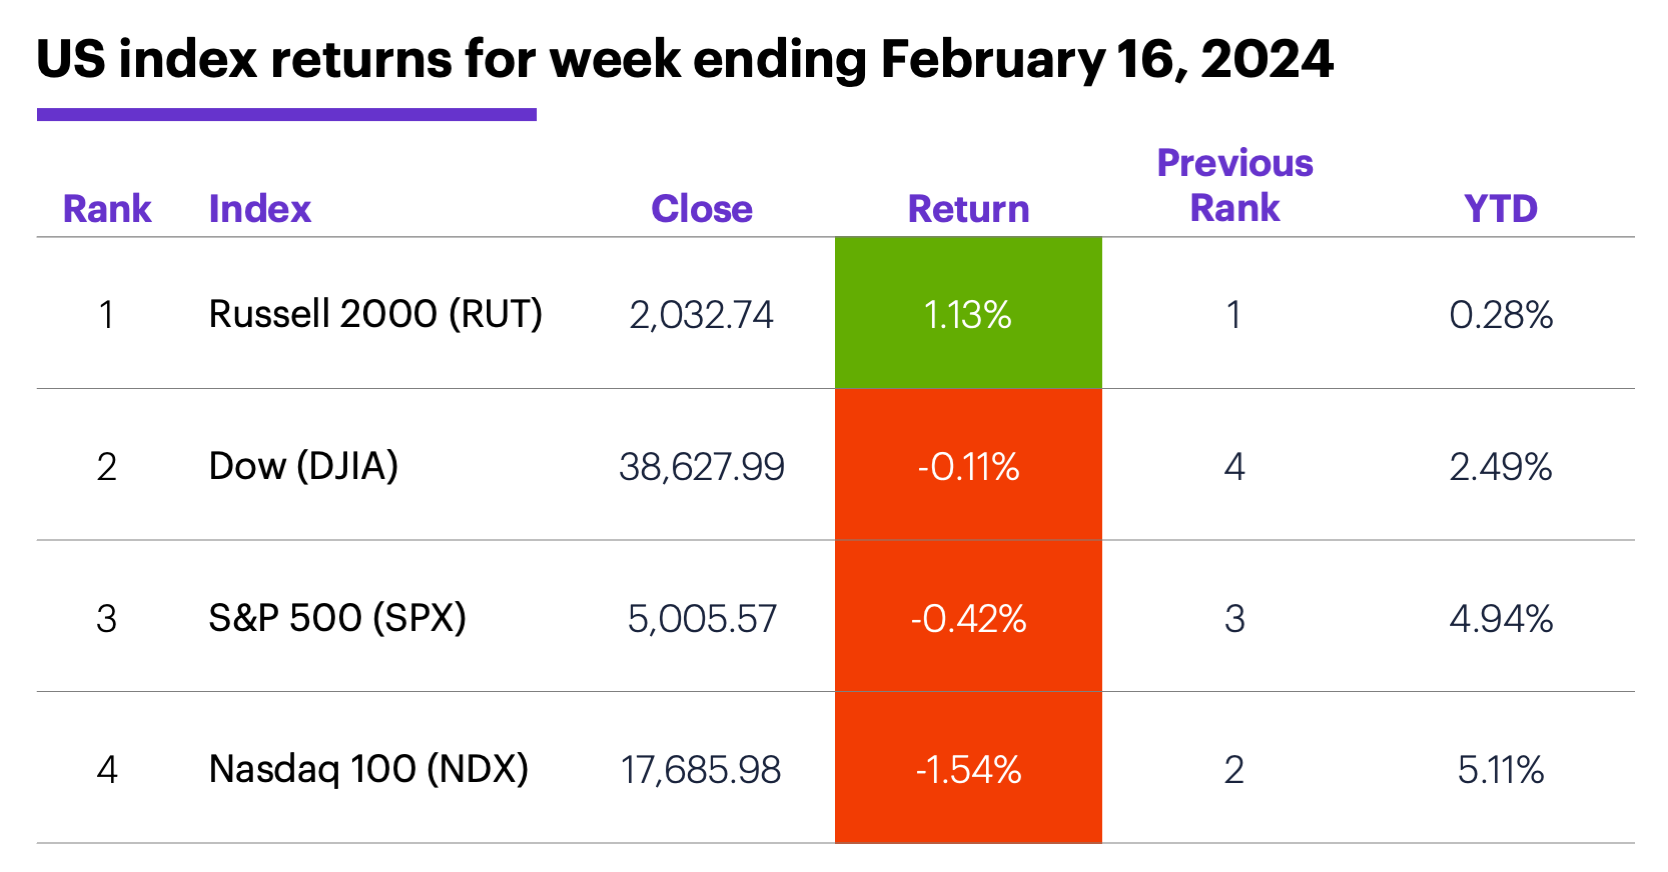 US stock index performance for week ending 2/16/24. S&P 500 (SPX), Nasdaq 100 (NDX), Russell 2000 (RUT), Dow Jones Industrial Average (DJIA).